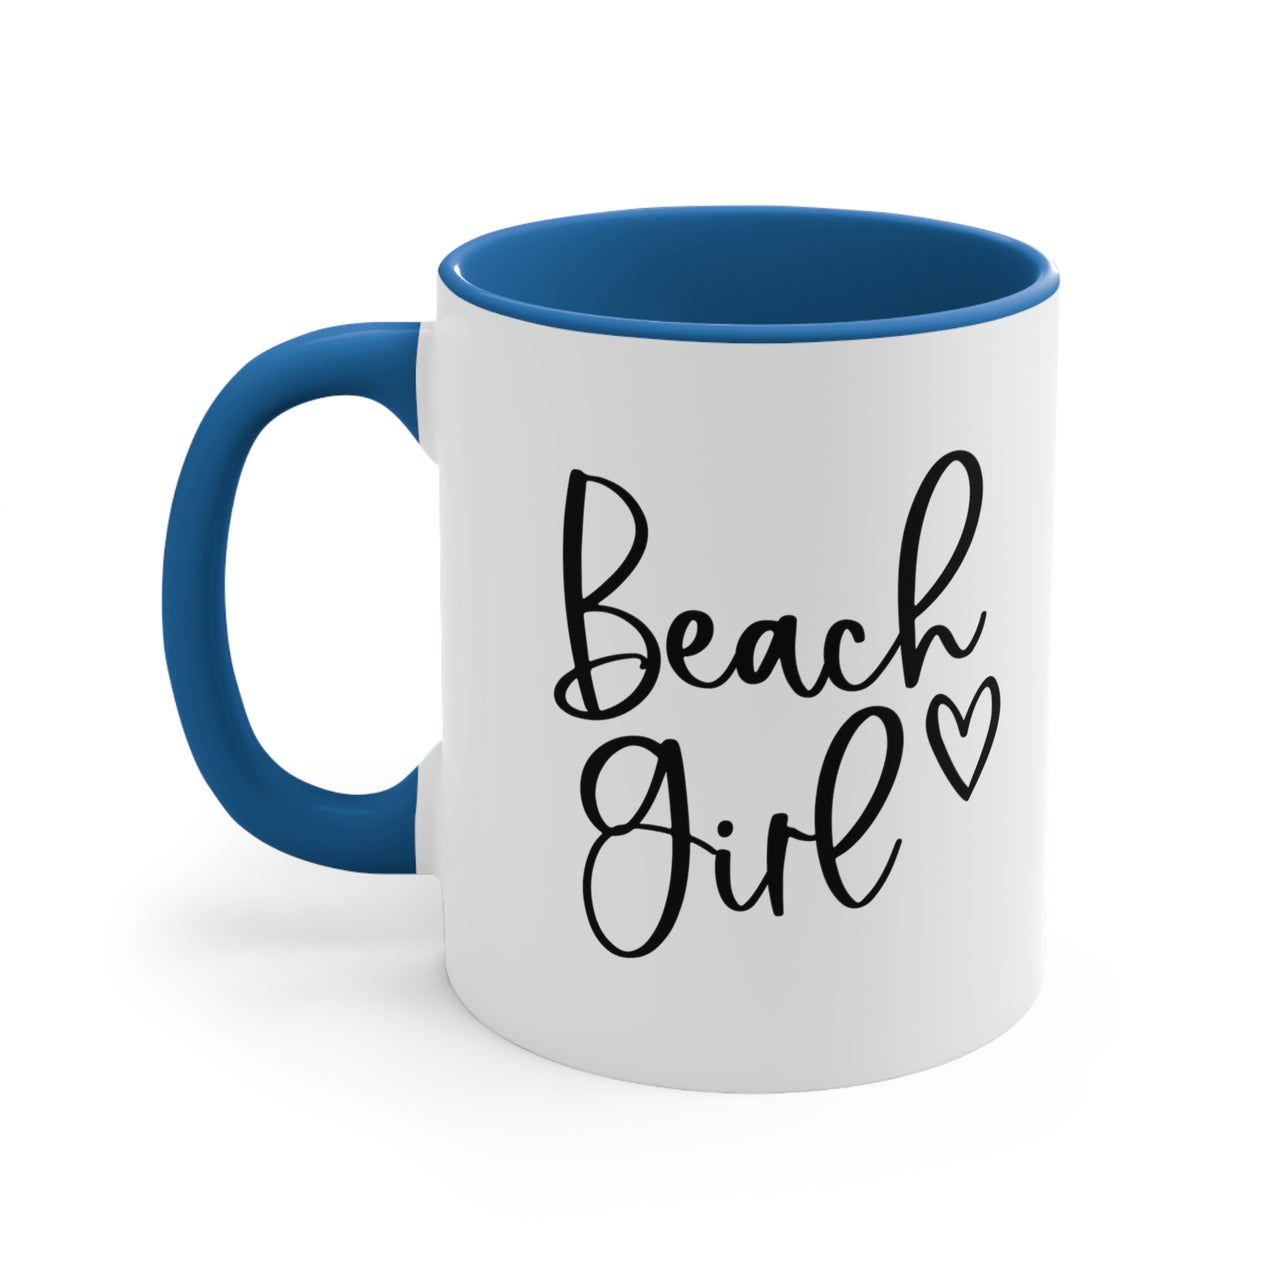 Beach Girl Ceramic Coffee Mug, 5 Colors Mugs New England Trading Co Light Blue  